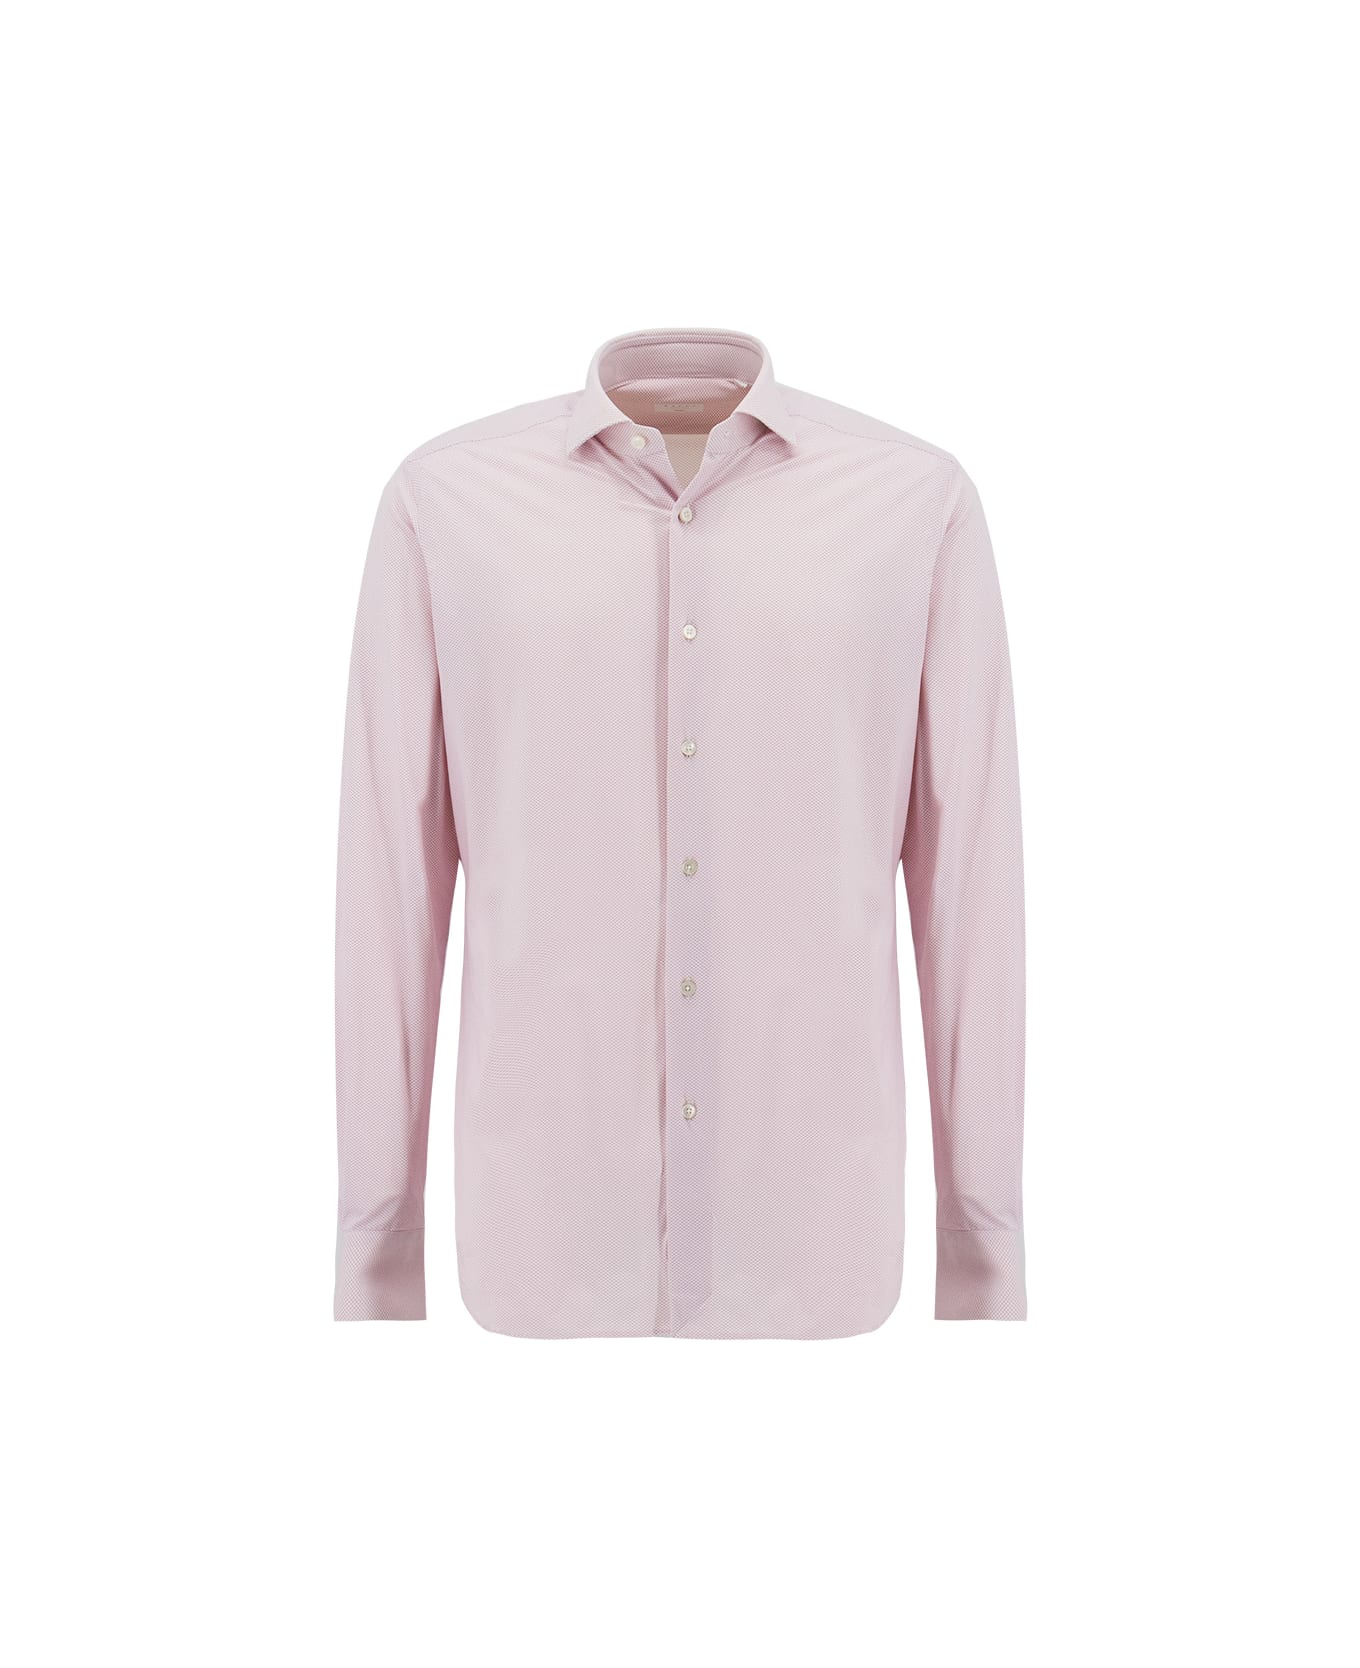 Xacus Shirt - PINK AND WHITE FANTASY シャツ